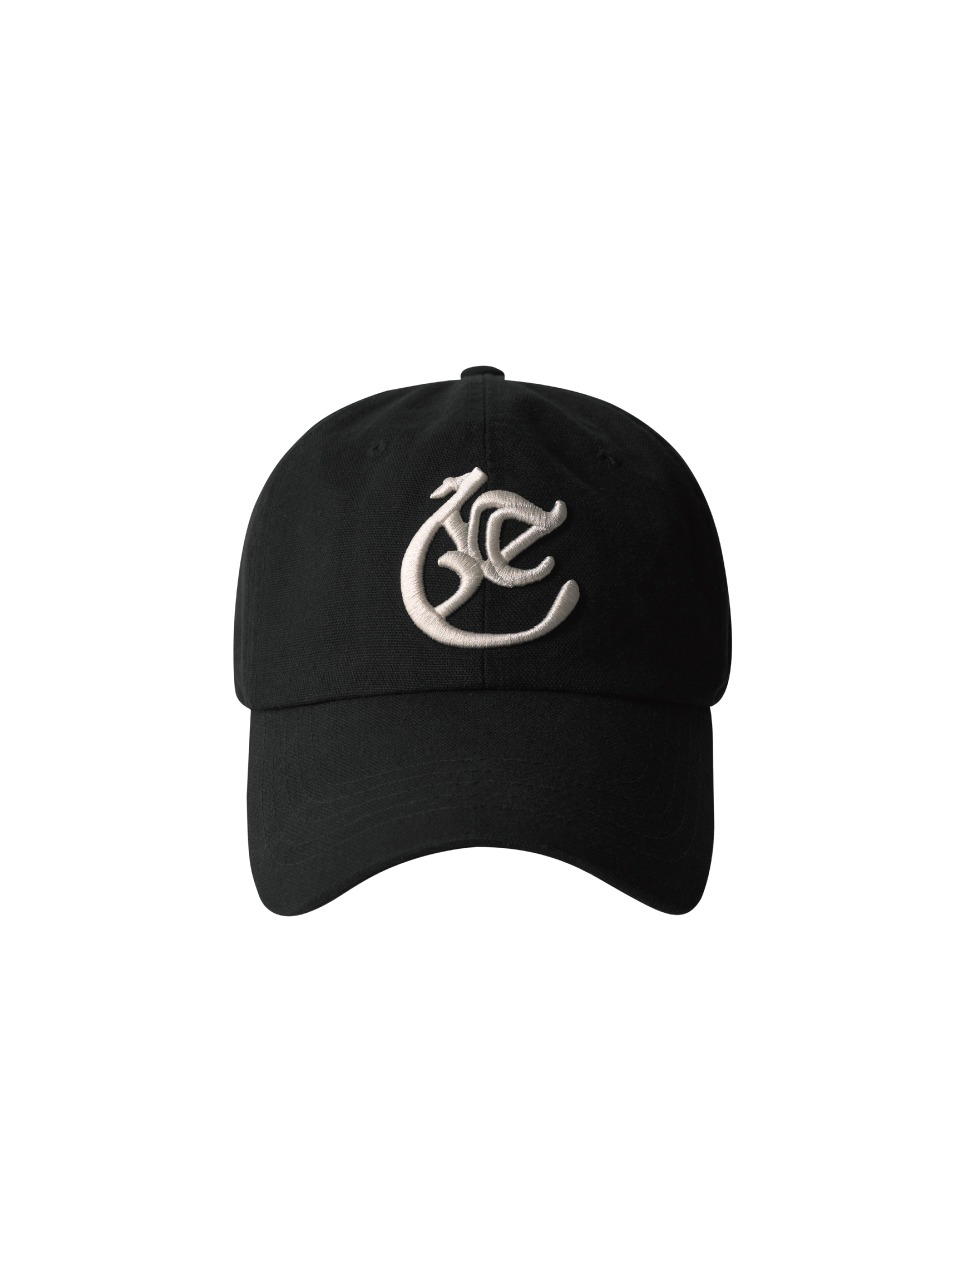 ETCE - CIRCLE LOGO CAP (BLACK)